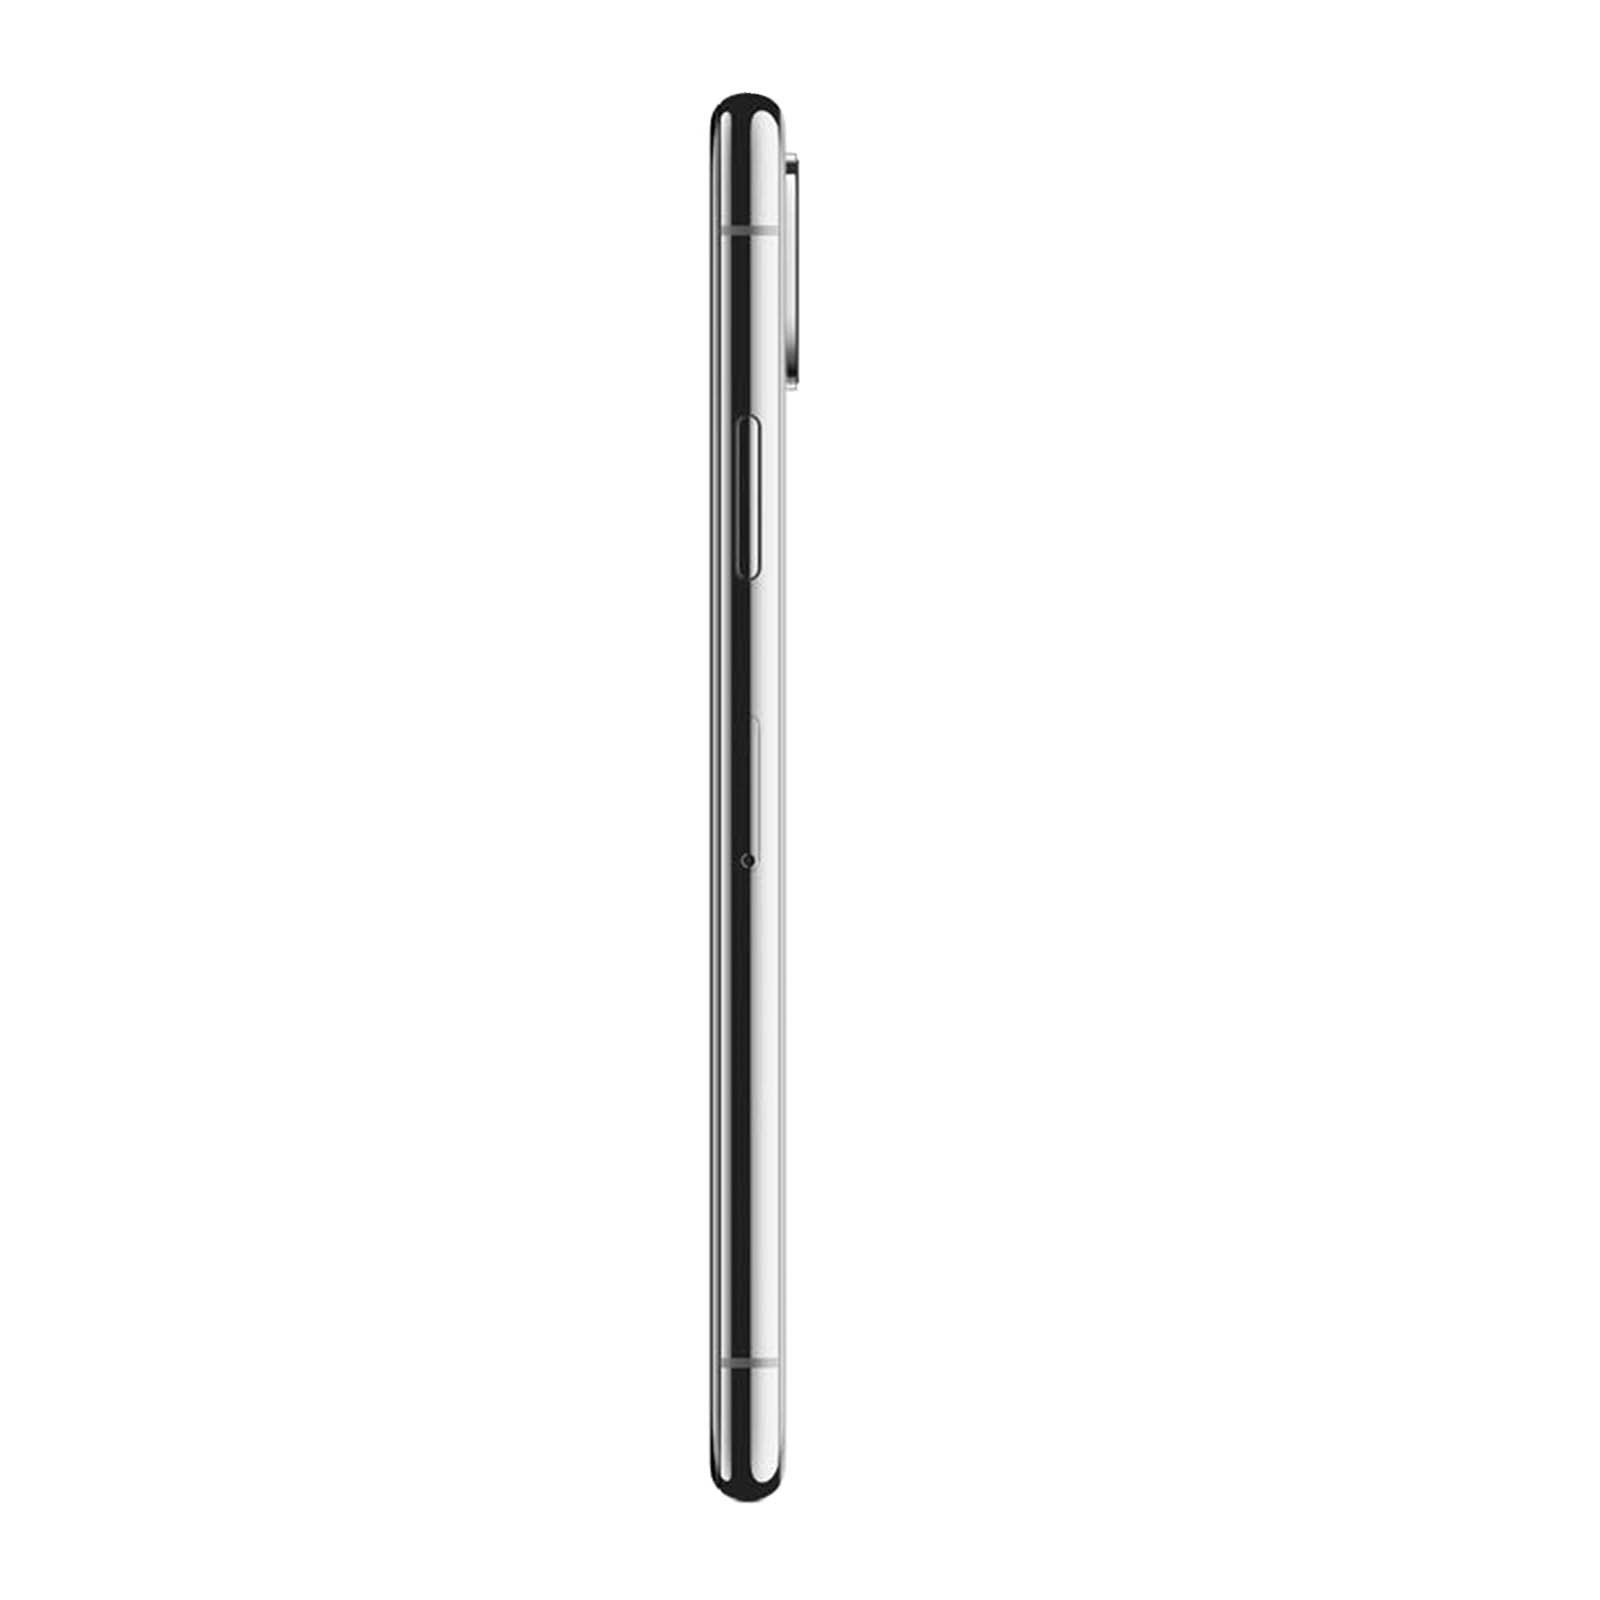 Apple iPhone XS 64GB Space Grey Fair - Unlocked